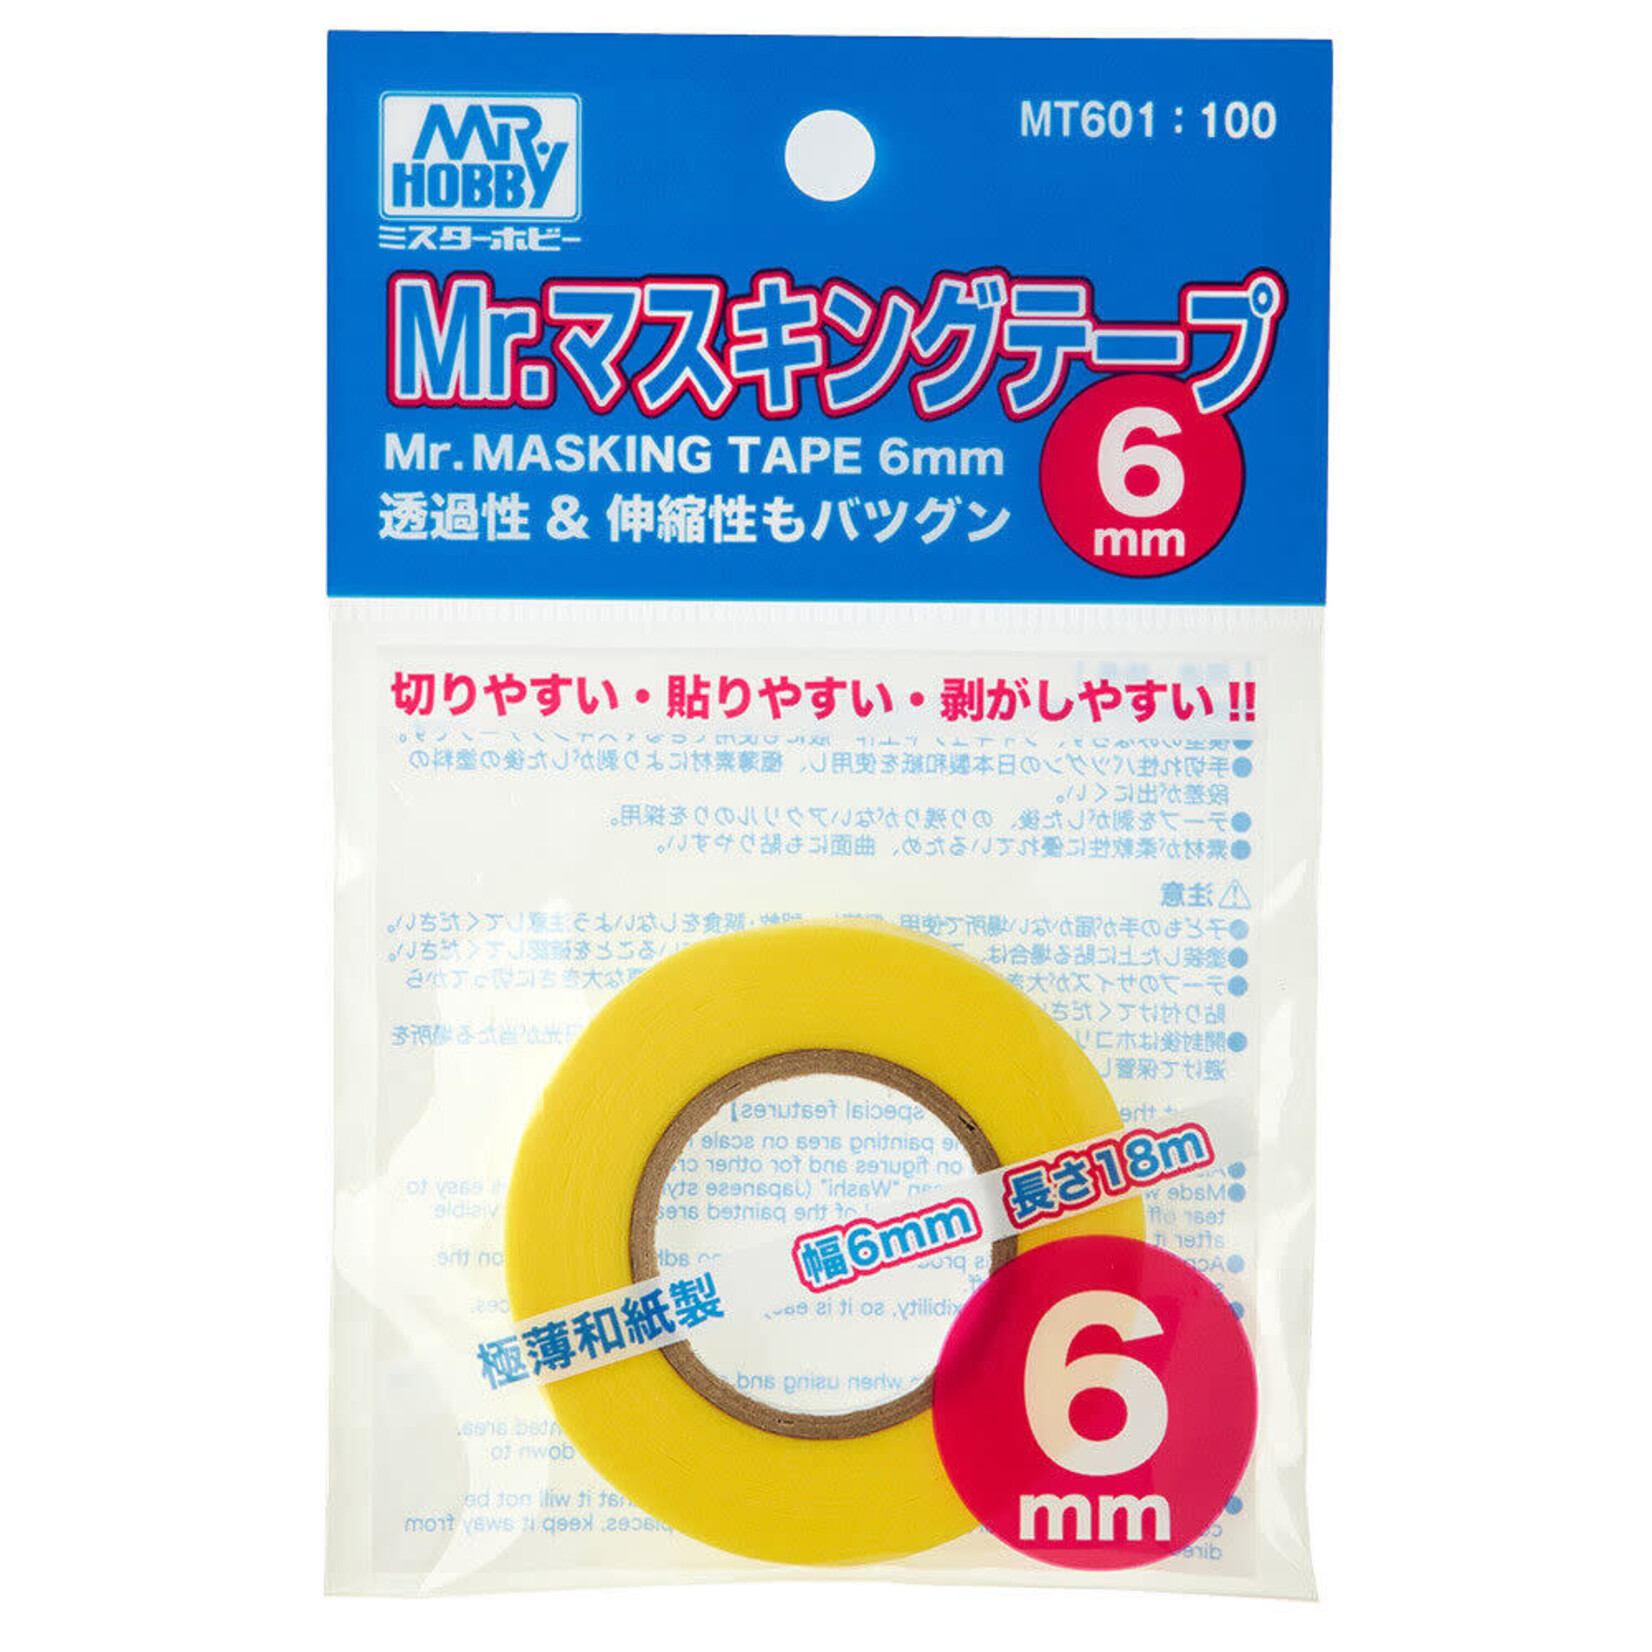 GSI Creos GNZ-MT601 Mr Hobby MT601 Mr Masking Tape 6mm